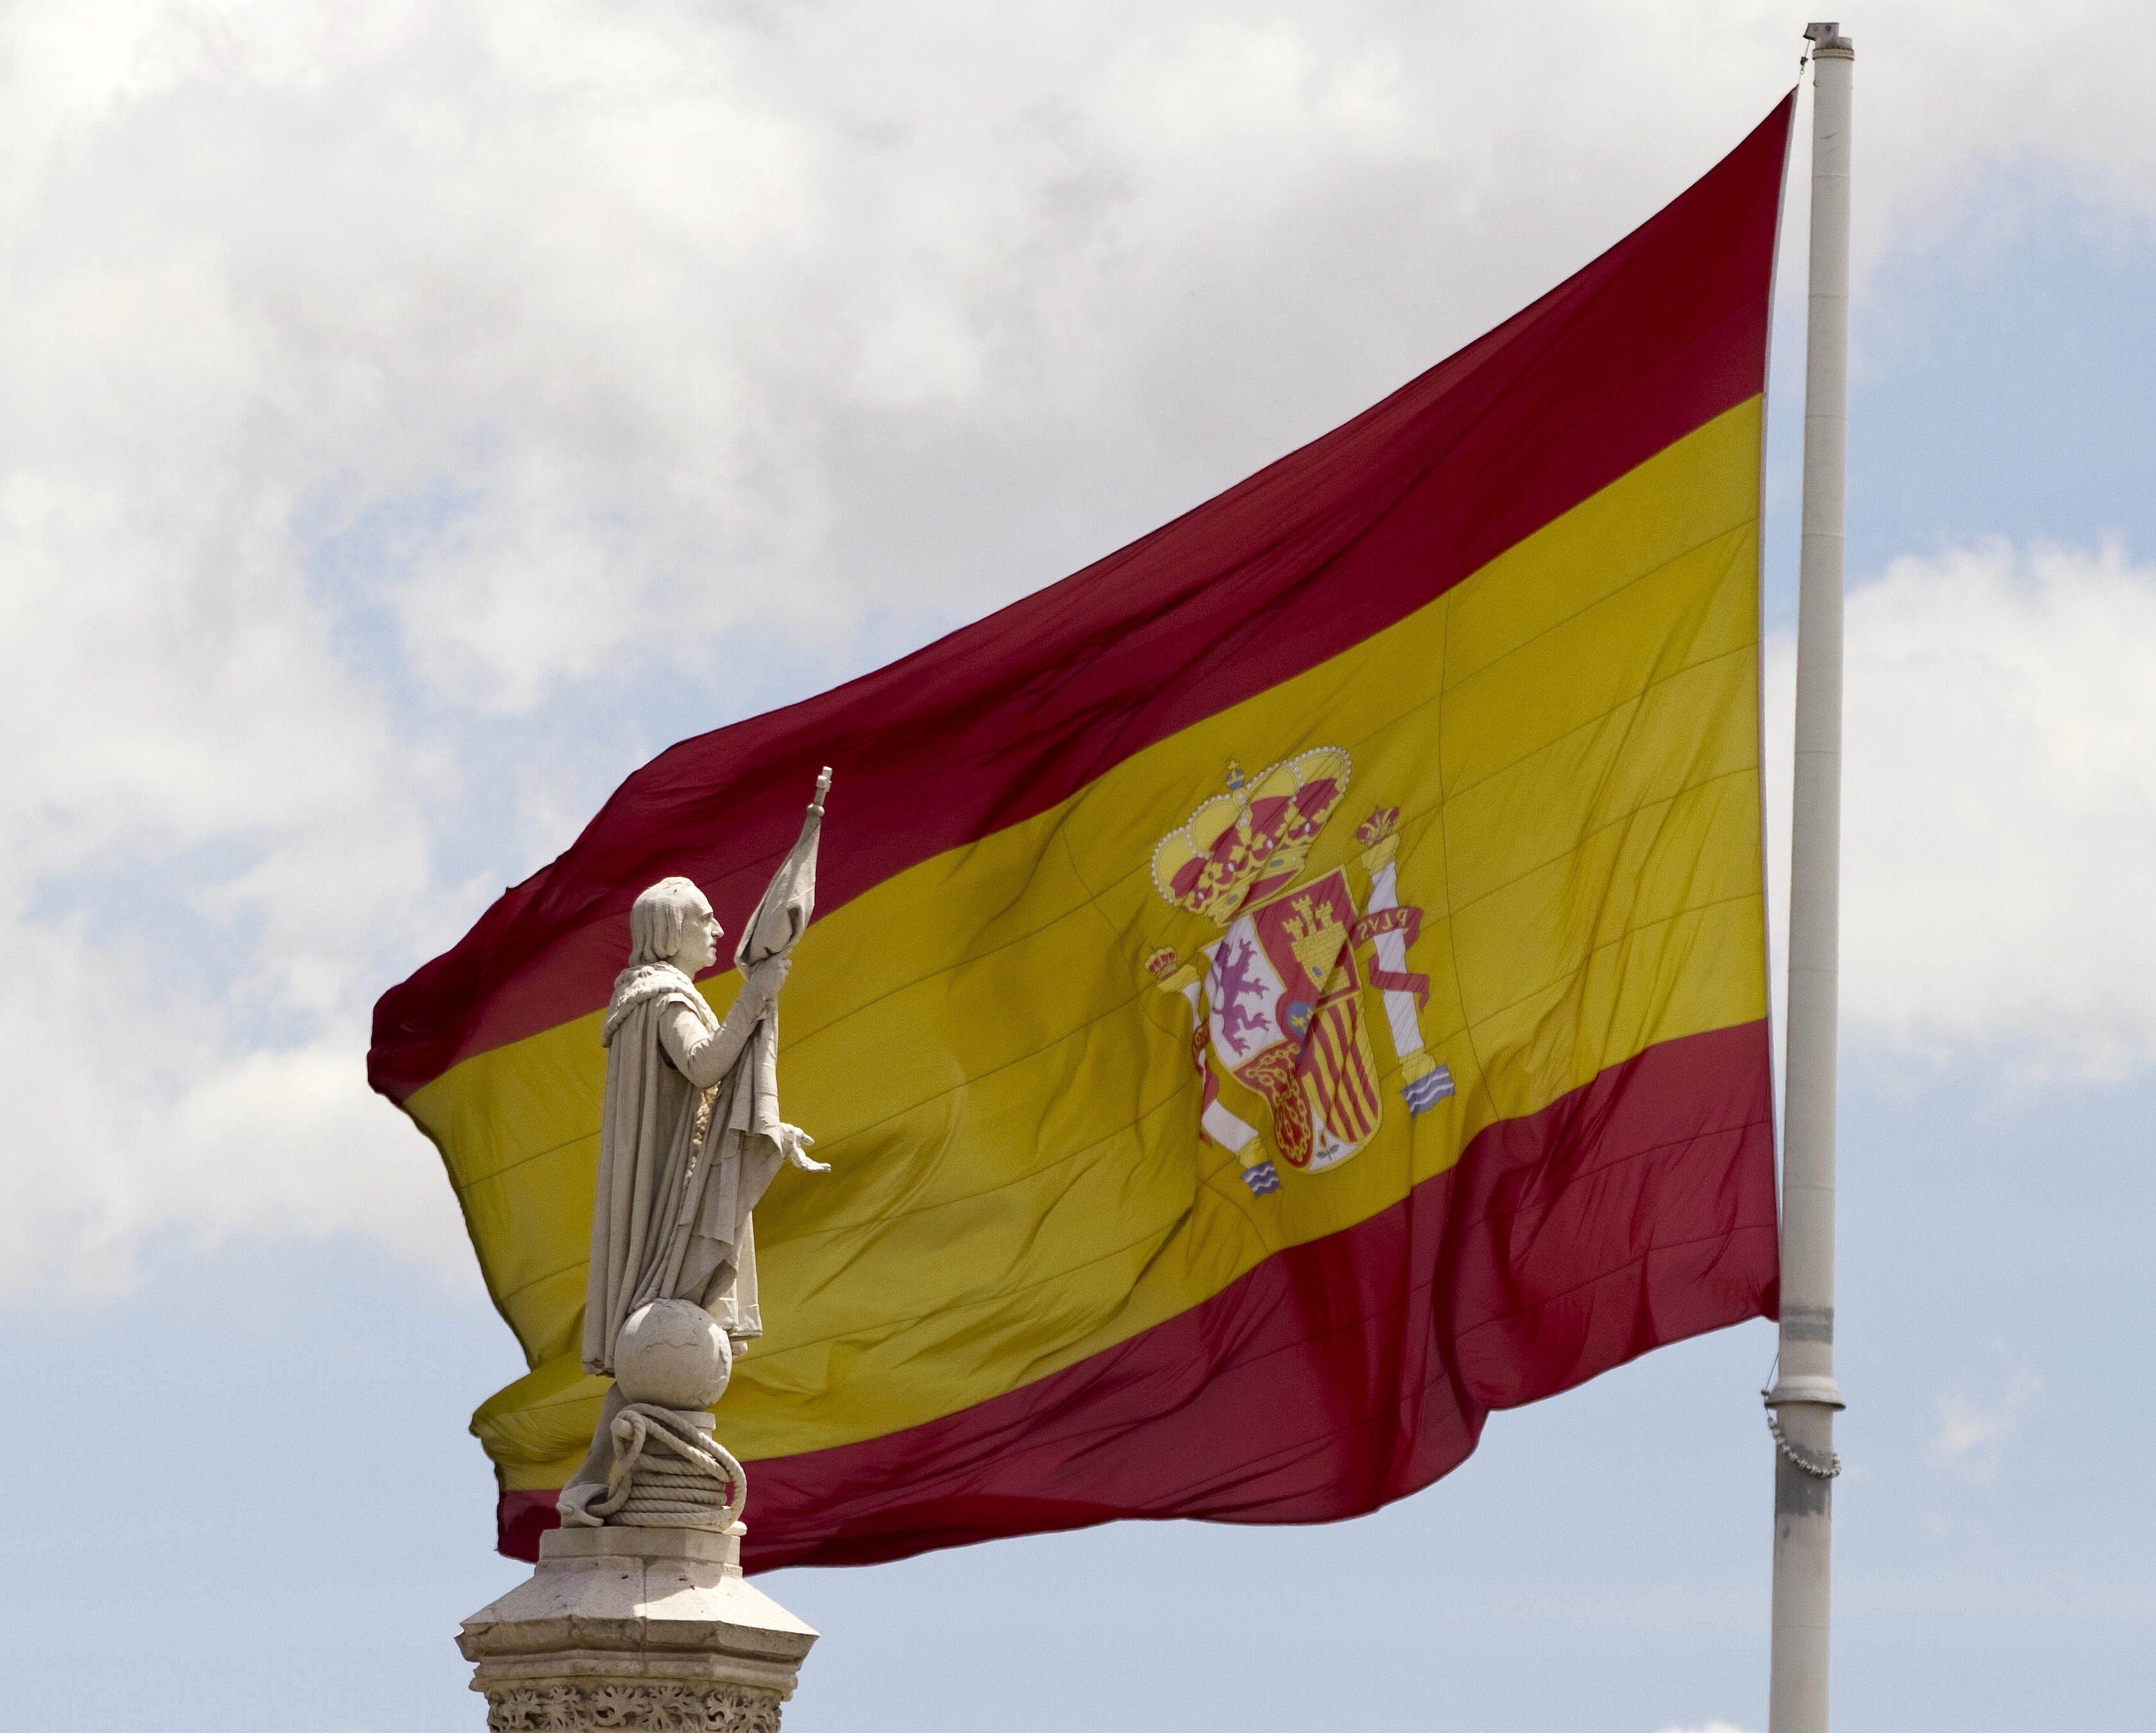 Aύξηση εταιρικής φορολογίας για να αποφύγει τις κυρώσεις προτείνει η Μαδρίτη